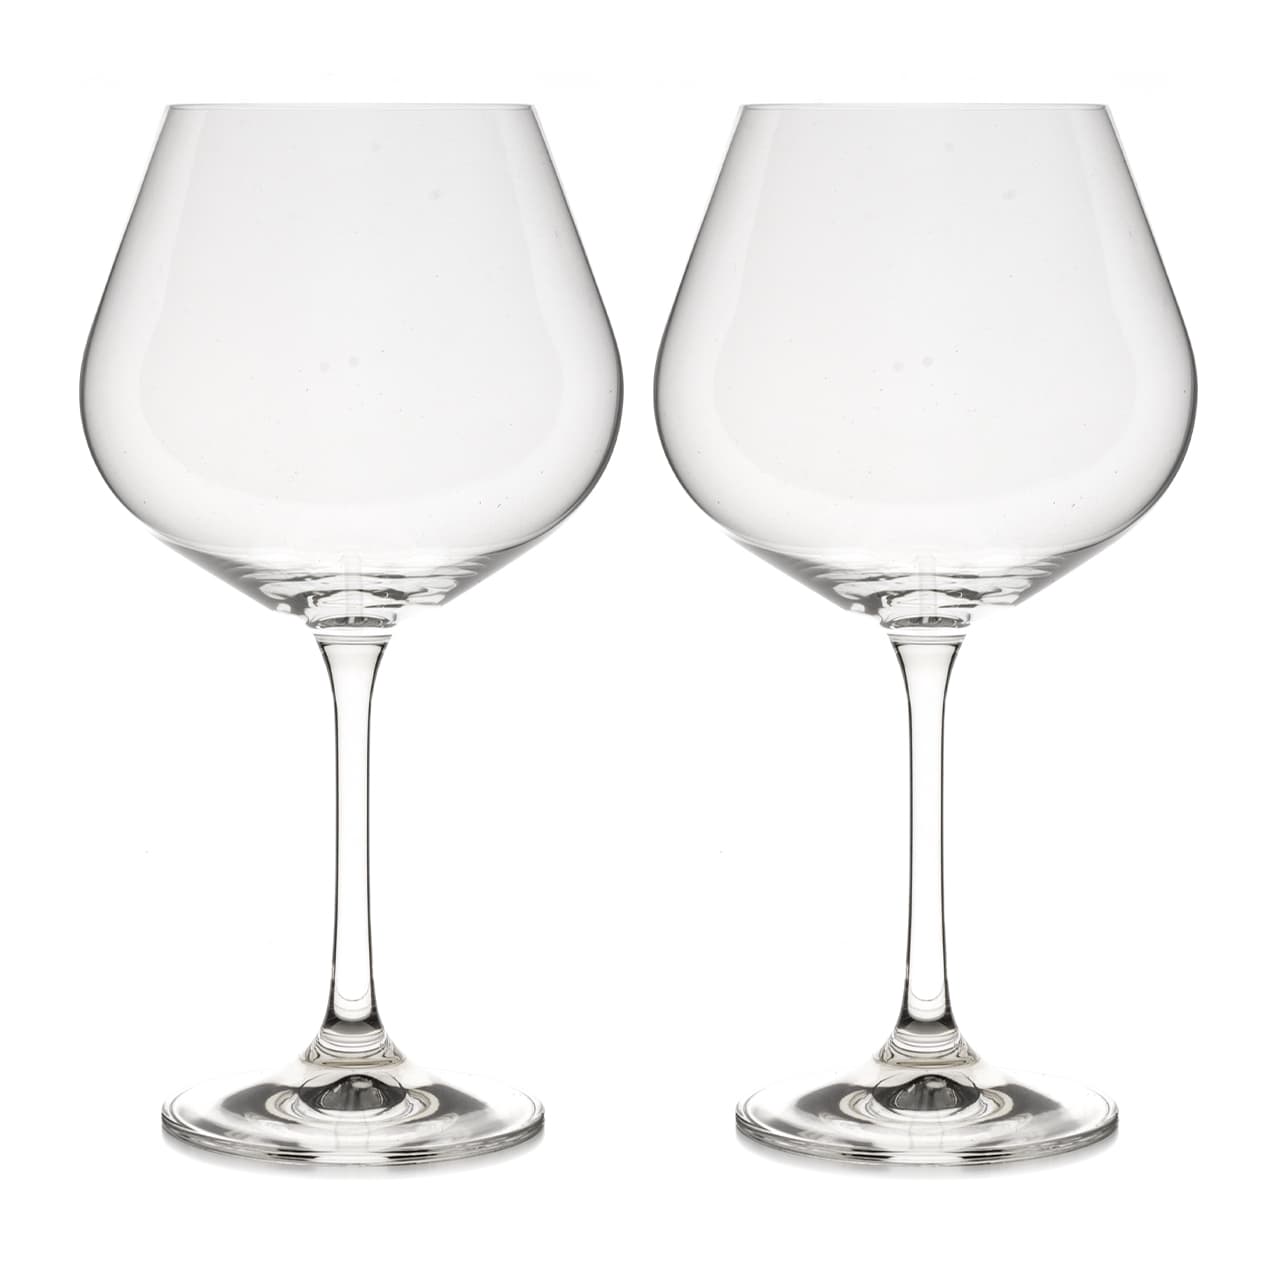 Dartington Crystal Revel Gin & Tonic Copa Glasses (Set of 2) (570ml)